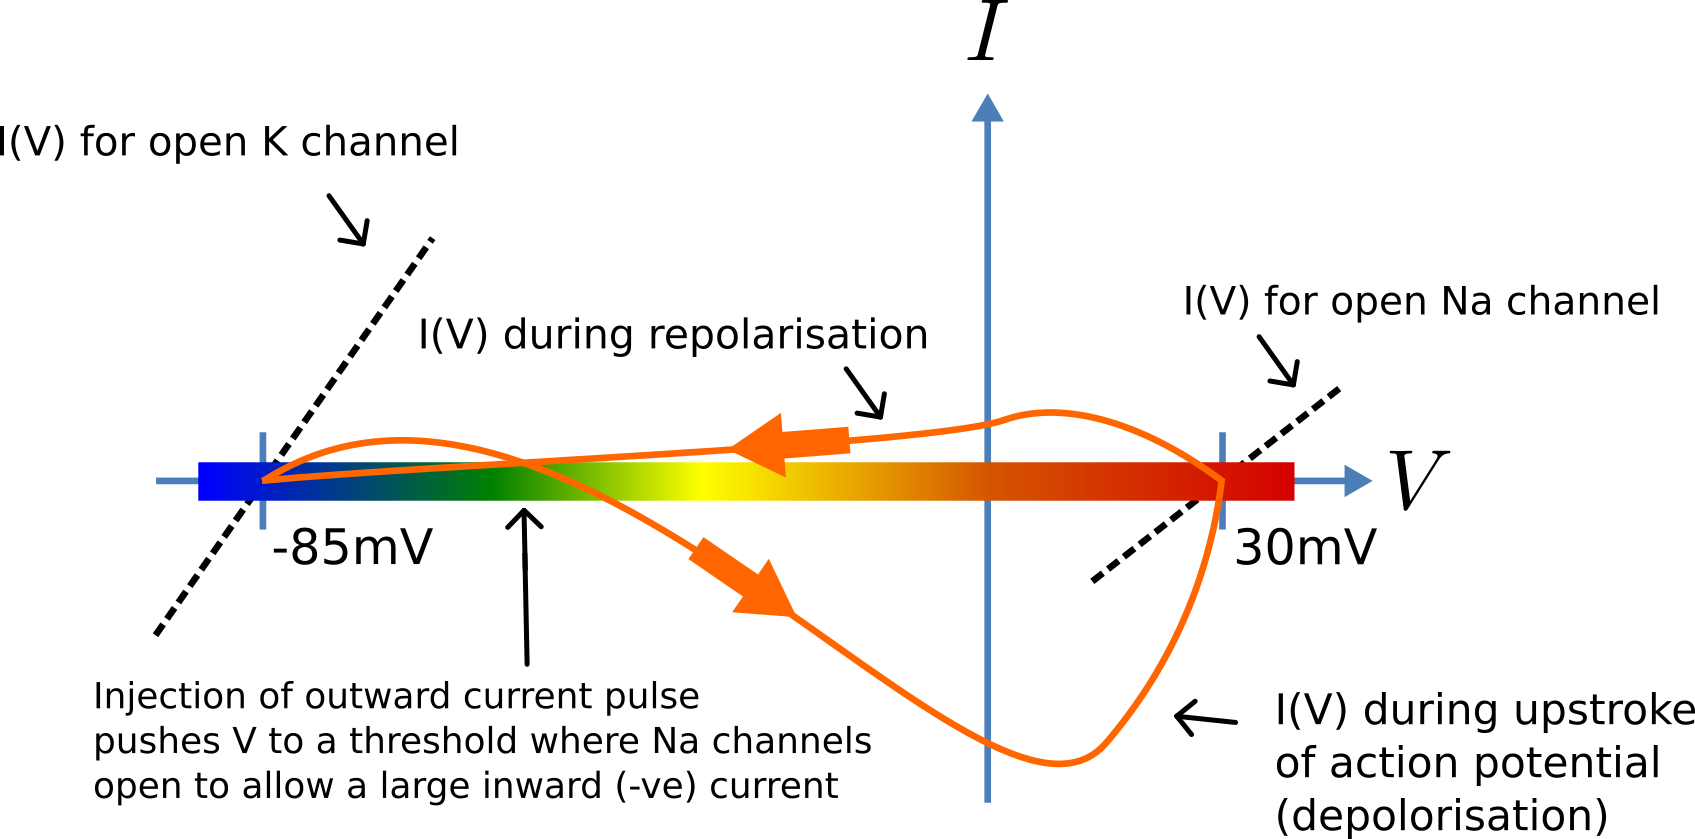 Current-voltage trajectory